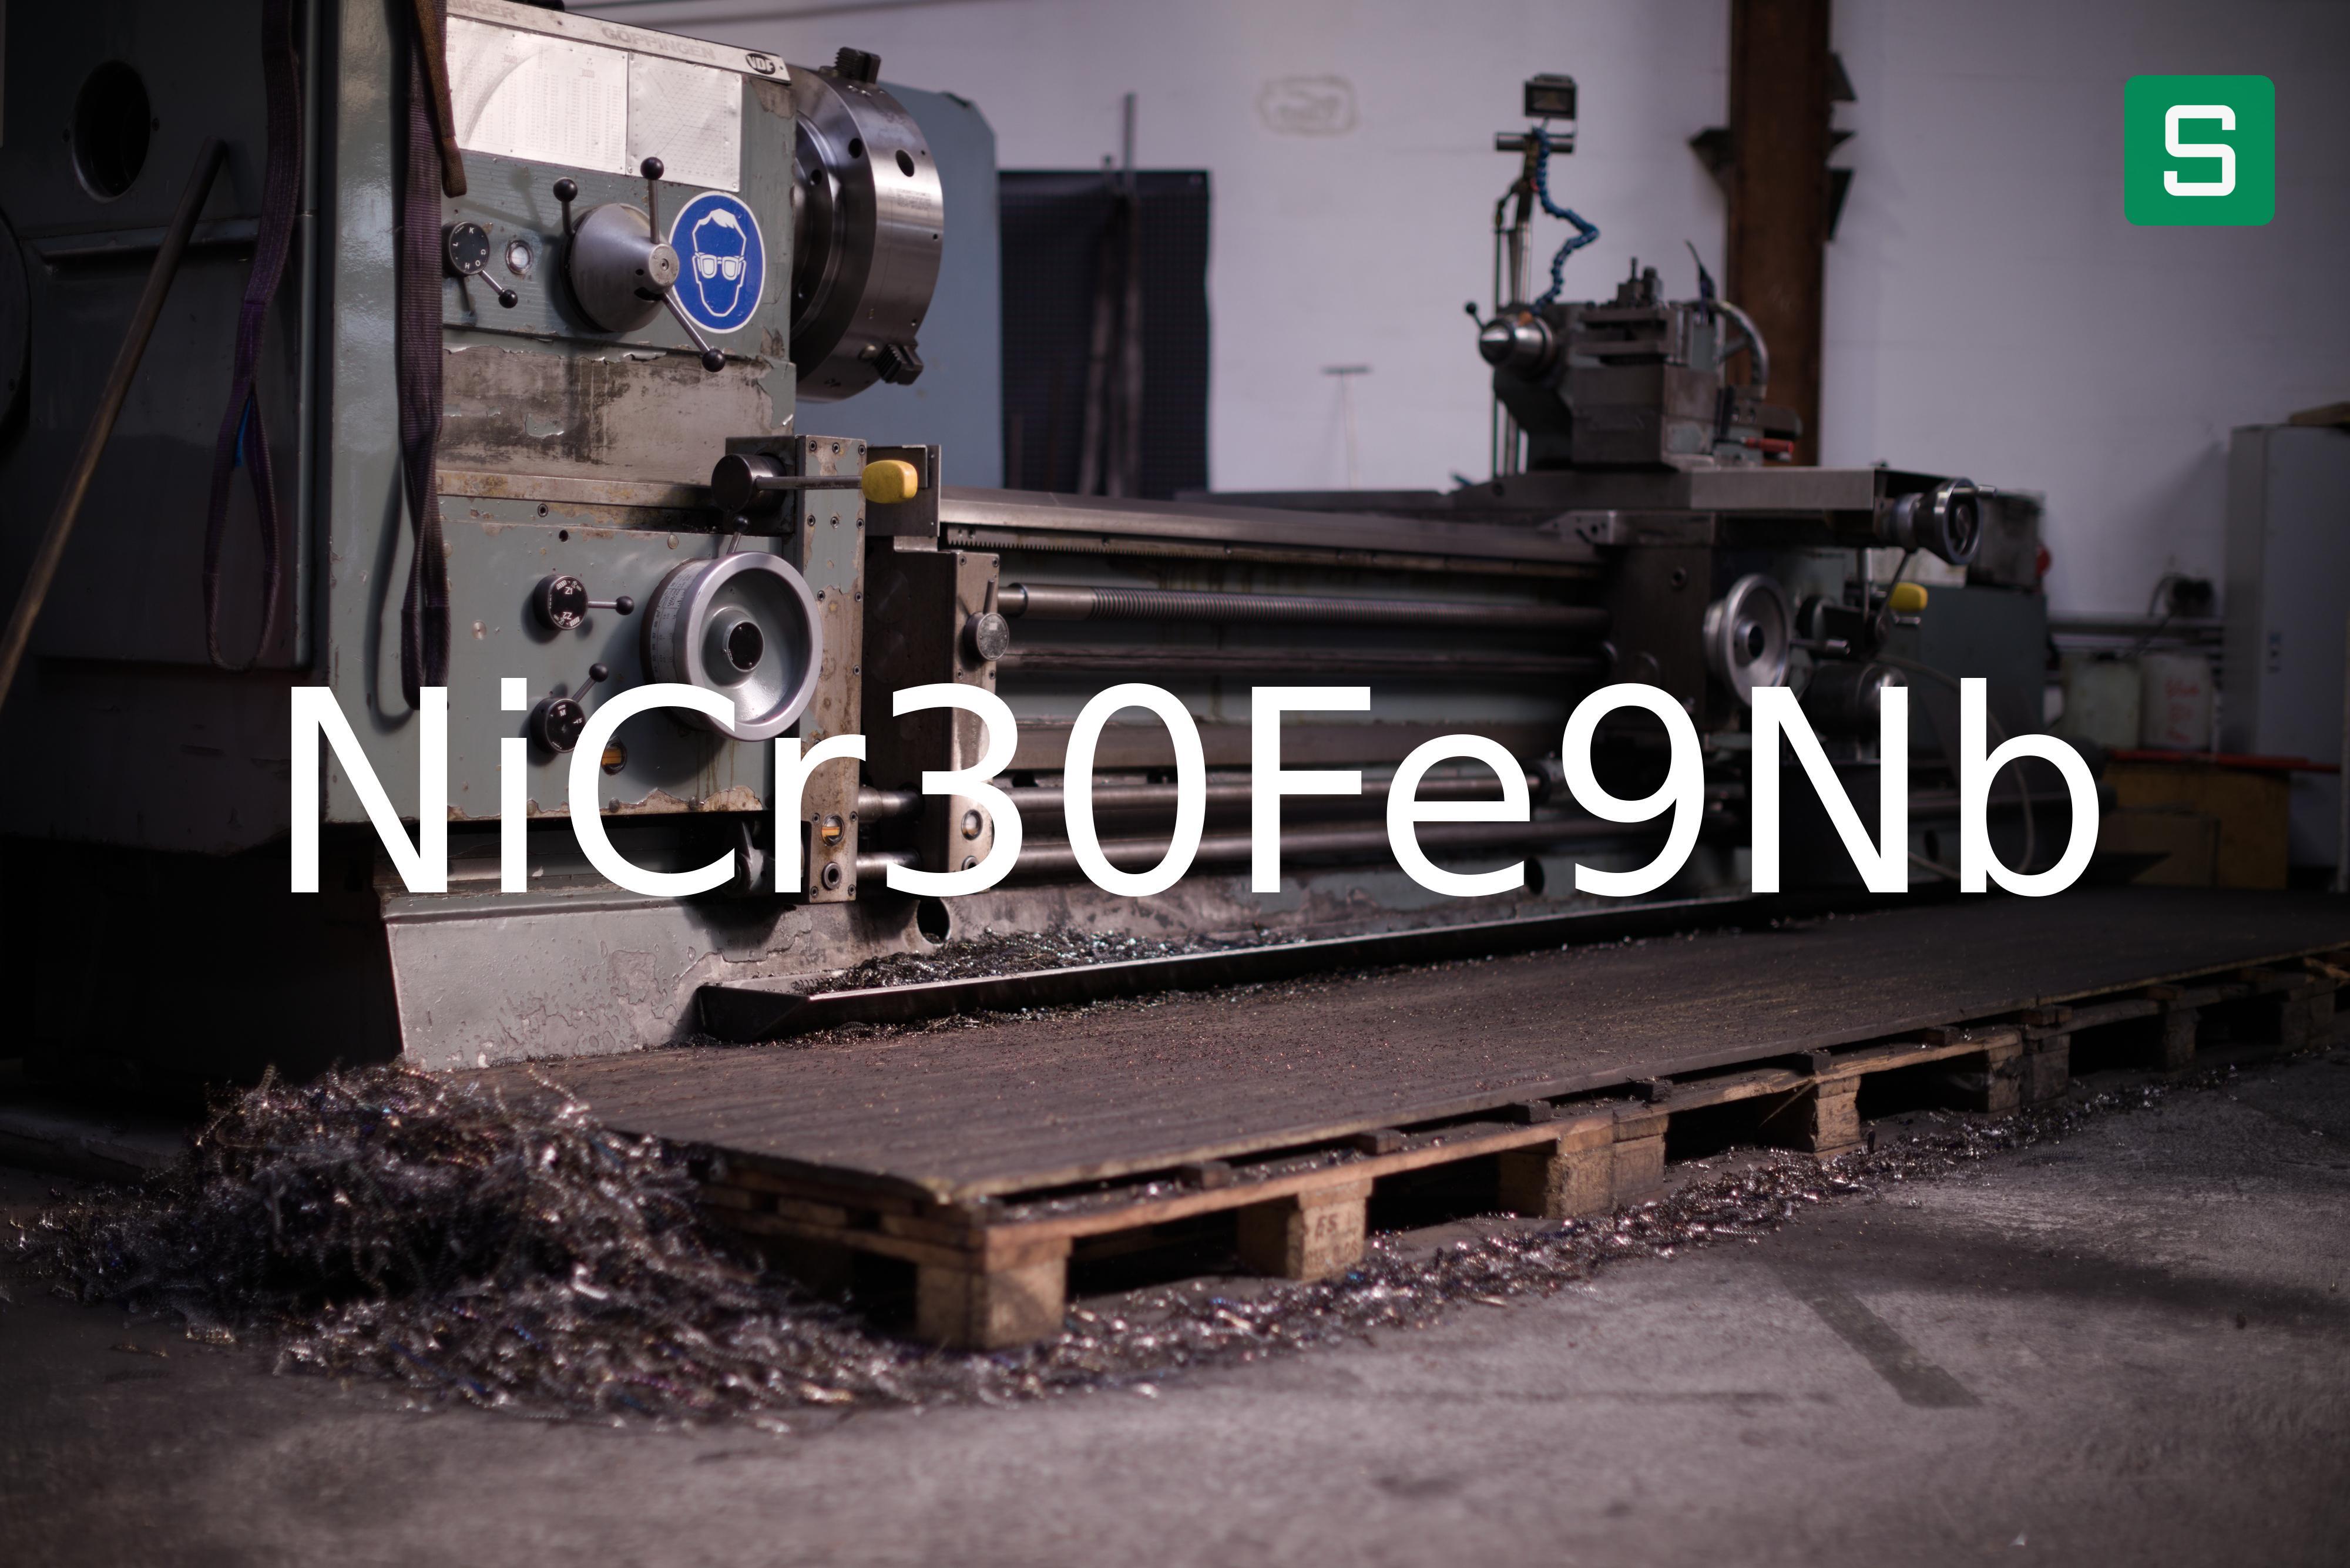 Steel Material: NiCr30Fe9Nb